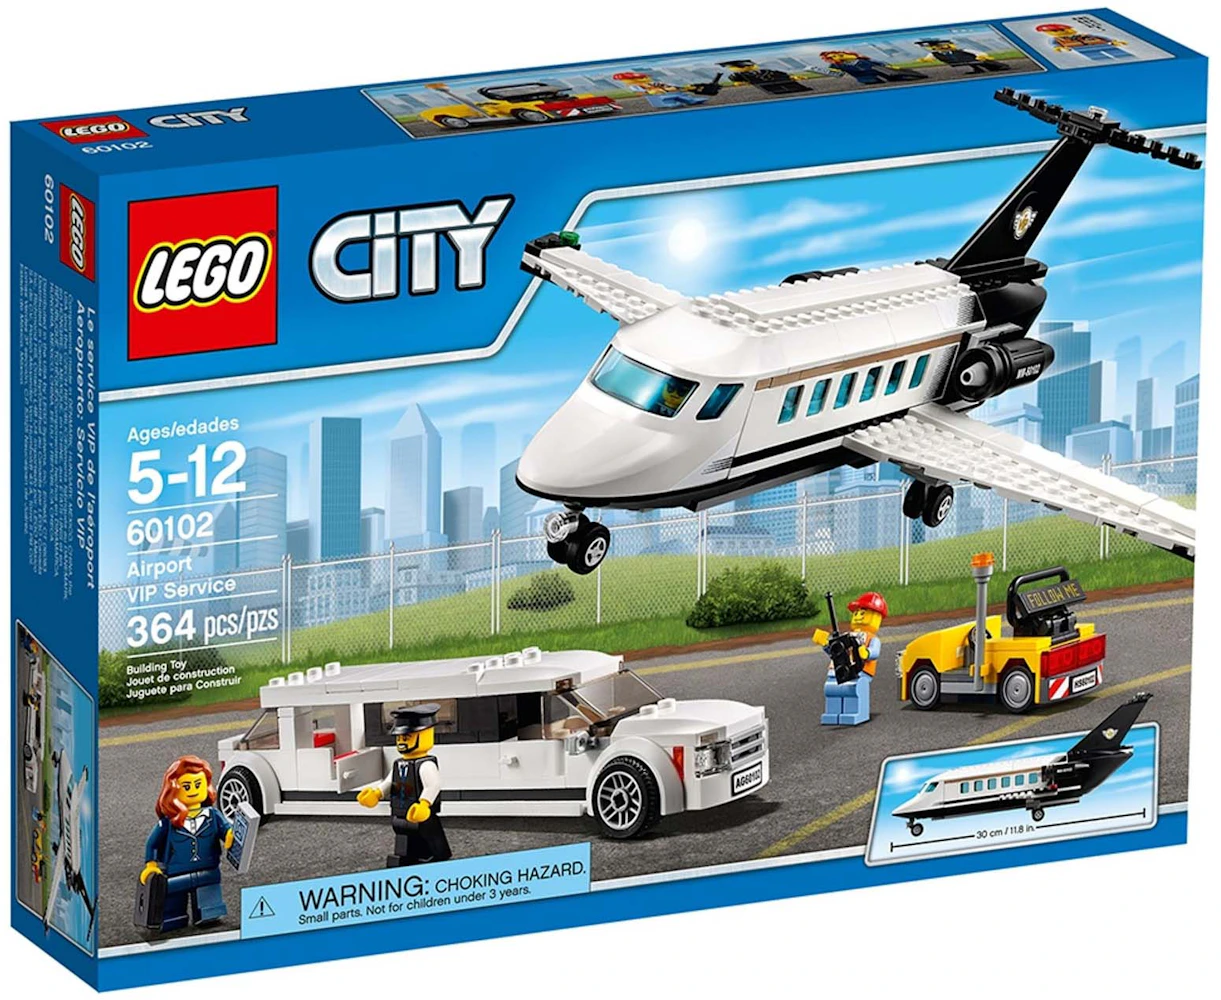 LEGO City Airport VIP Service - JP